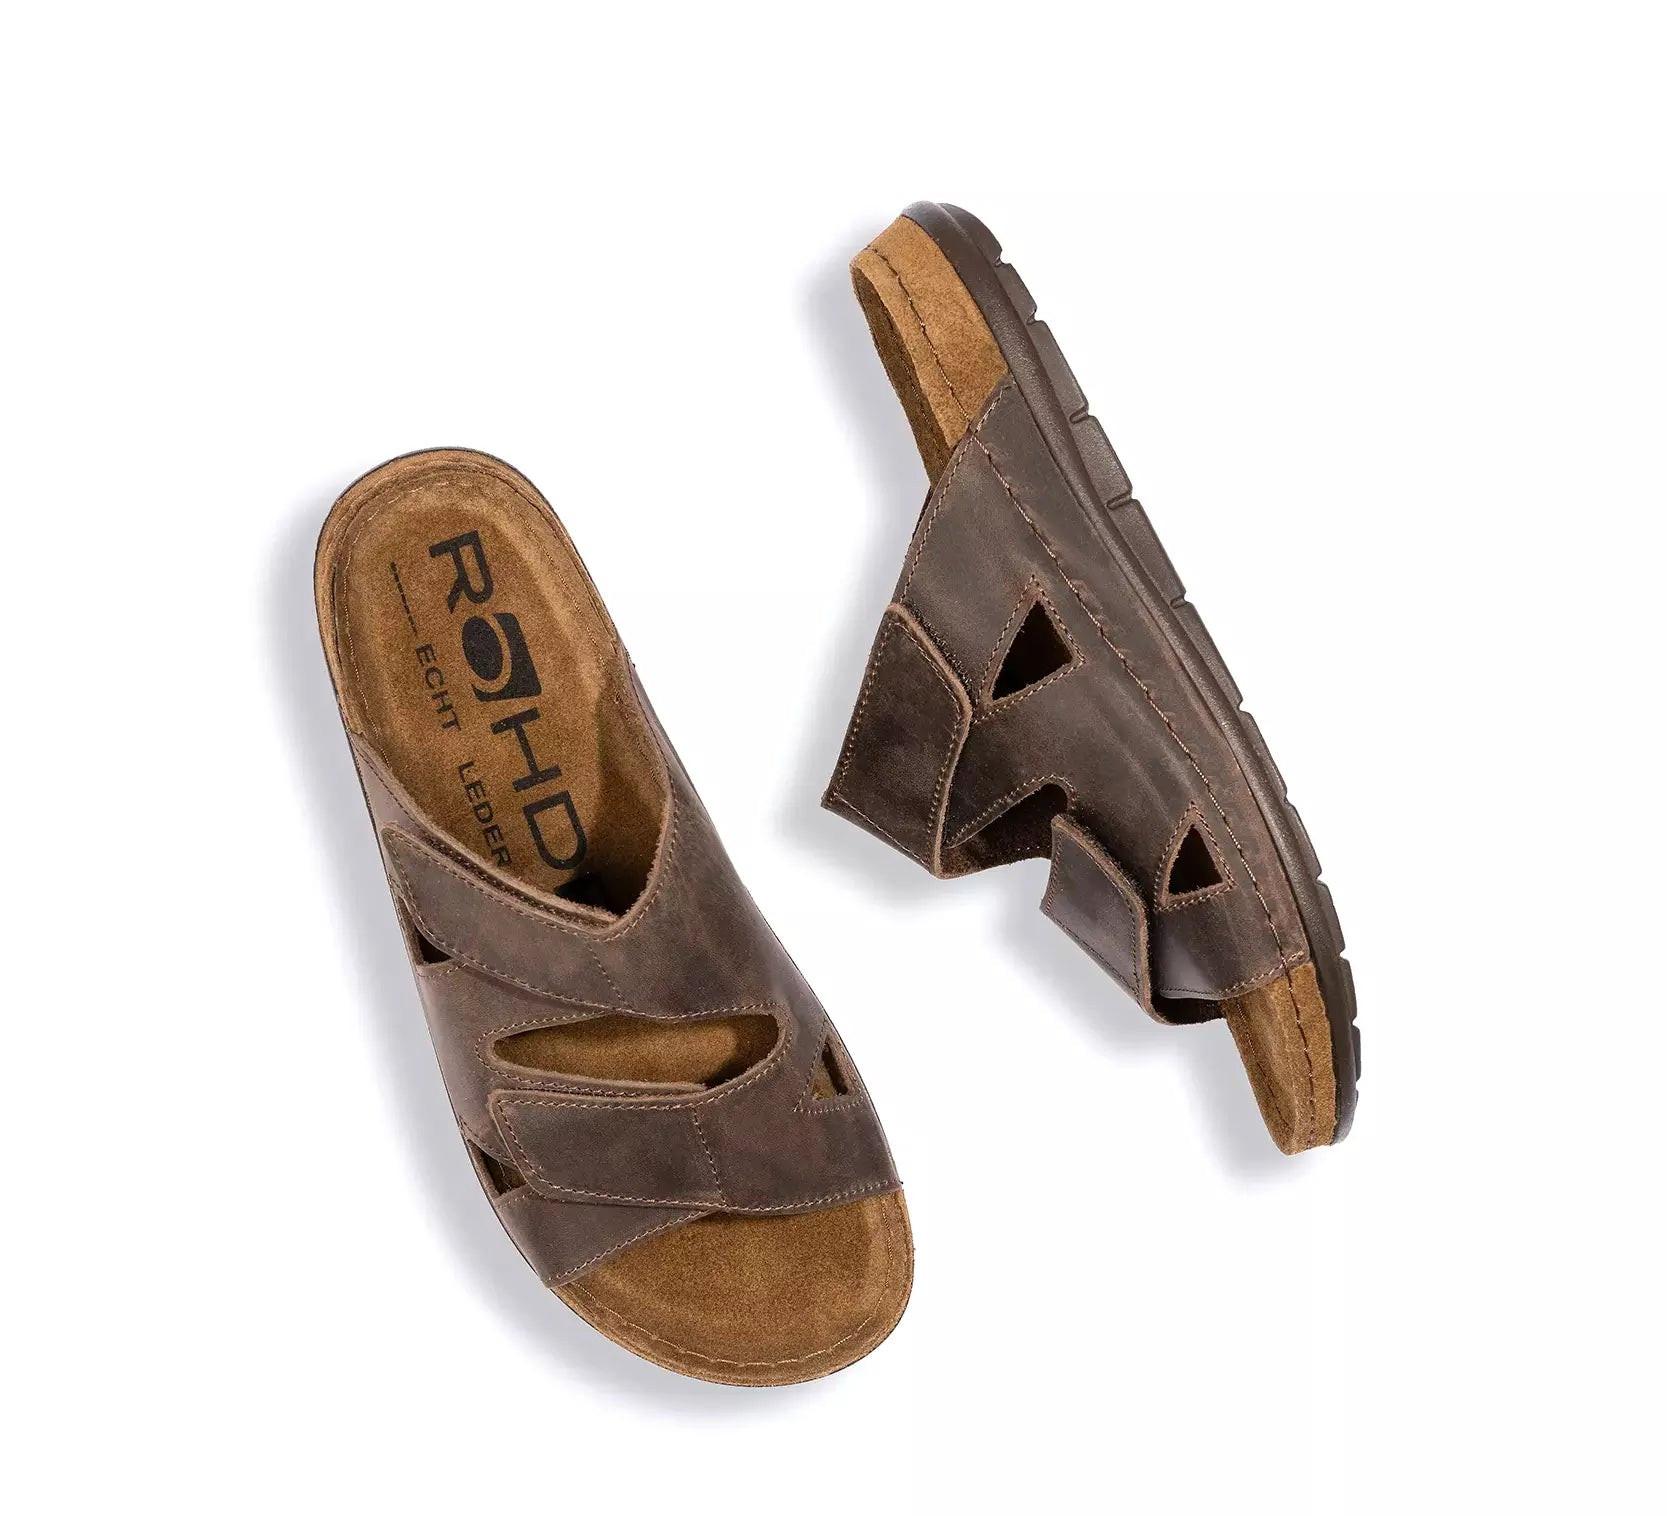 Rohde  Rodigo - Leder sandale 